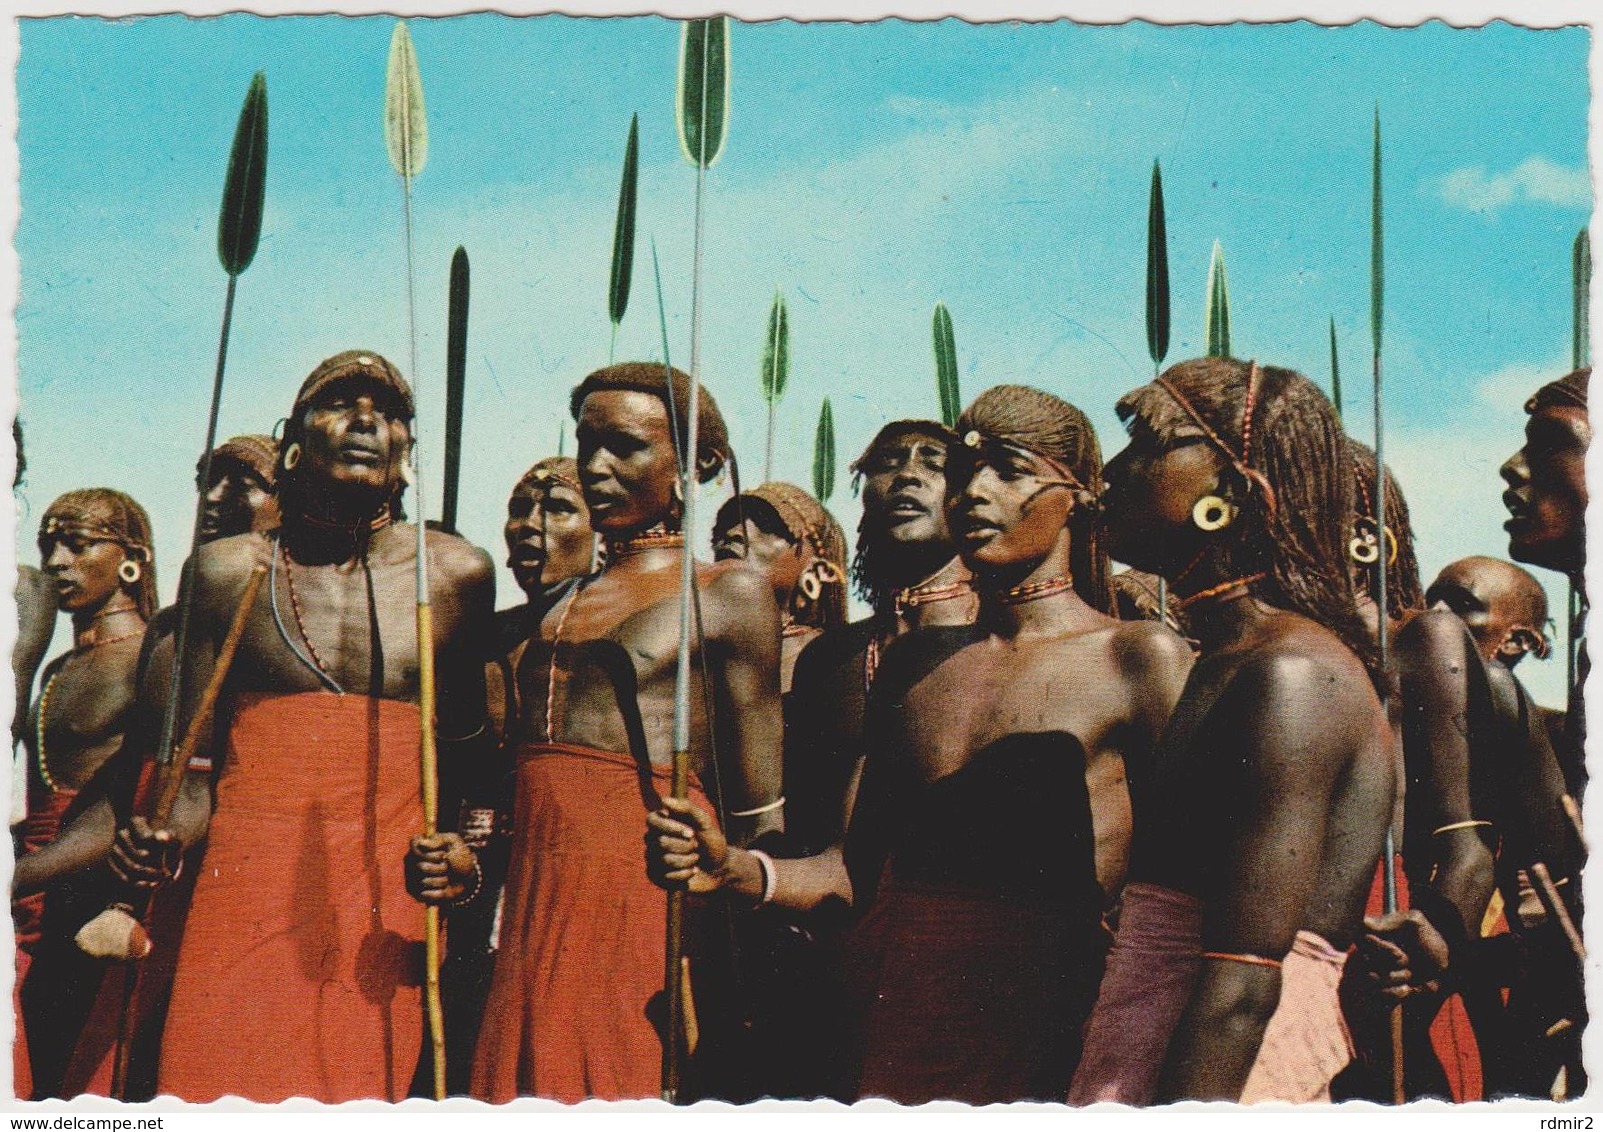 [208] SAMBURU DANCERS. - Ethnology, Etnología, Etnologia, Ethnologie.- Unwrite / Non écrite / No Escrita / Non Scritta. - Kenia